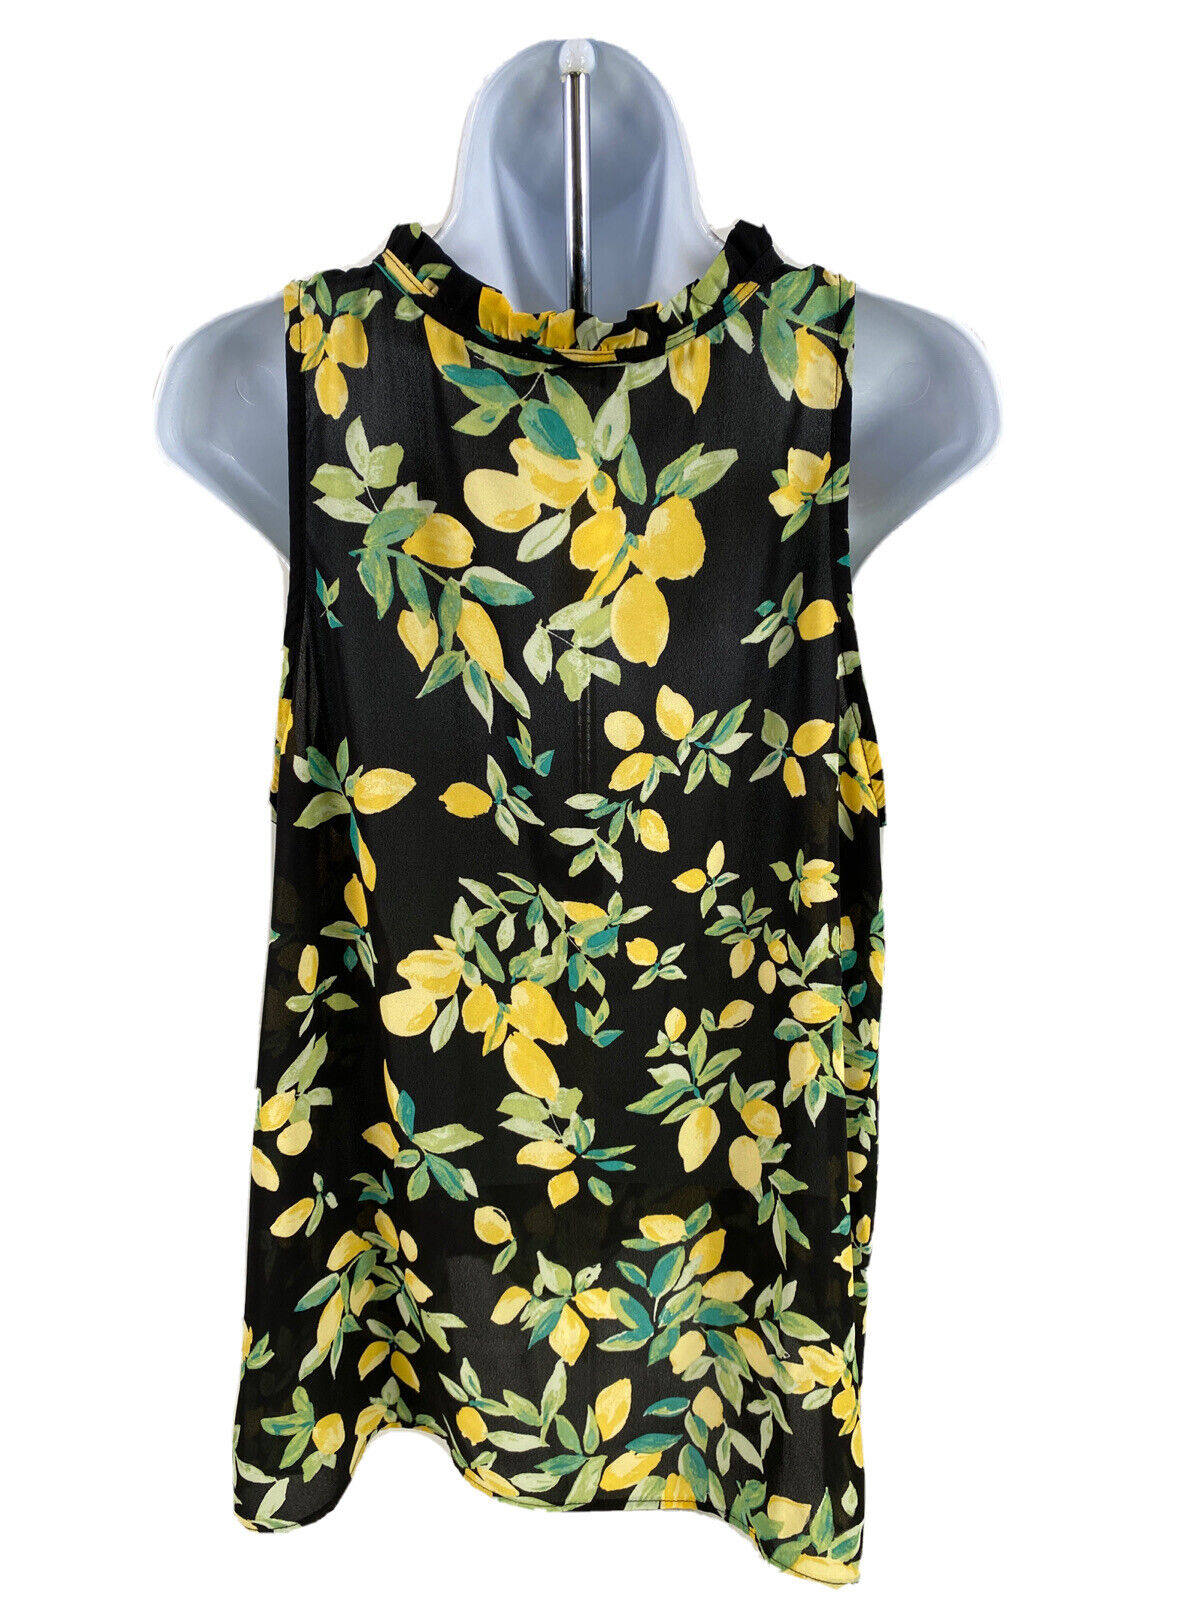 NEW Chenault Women's Black & Yellow Lemon Sheer Sleeveless Top - XL